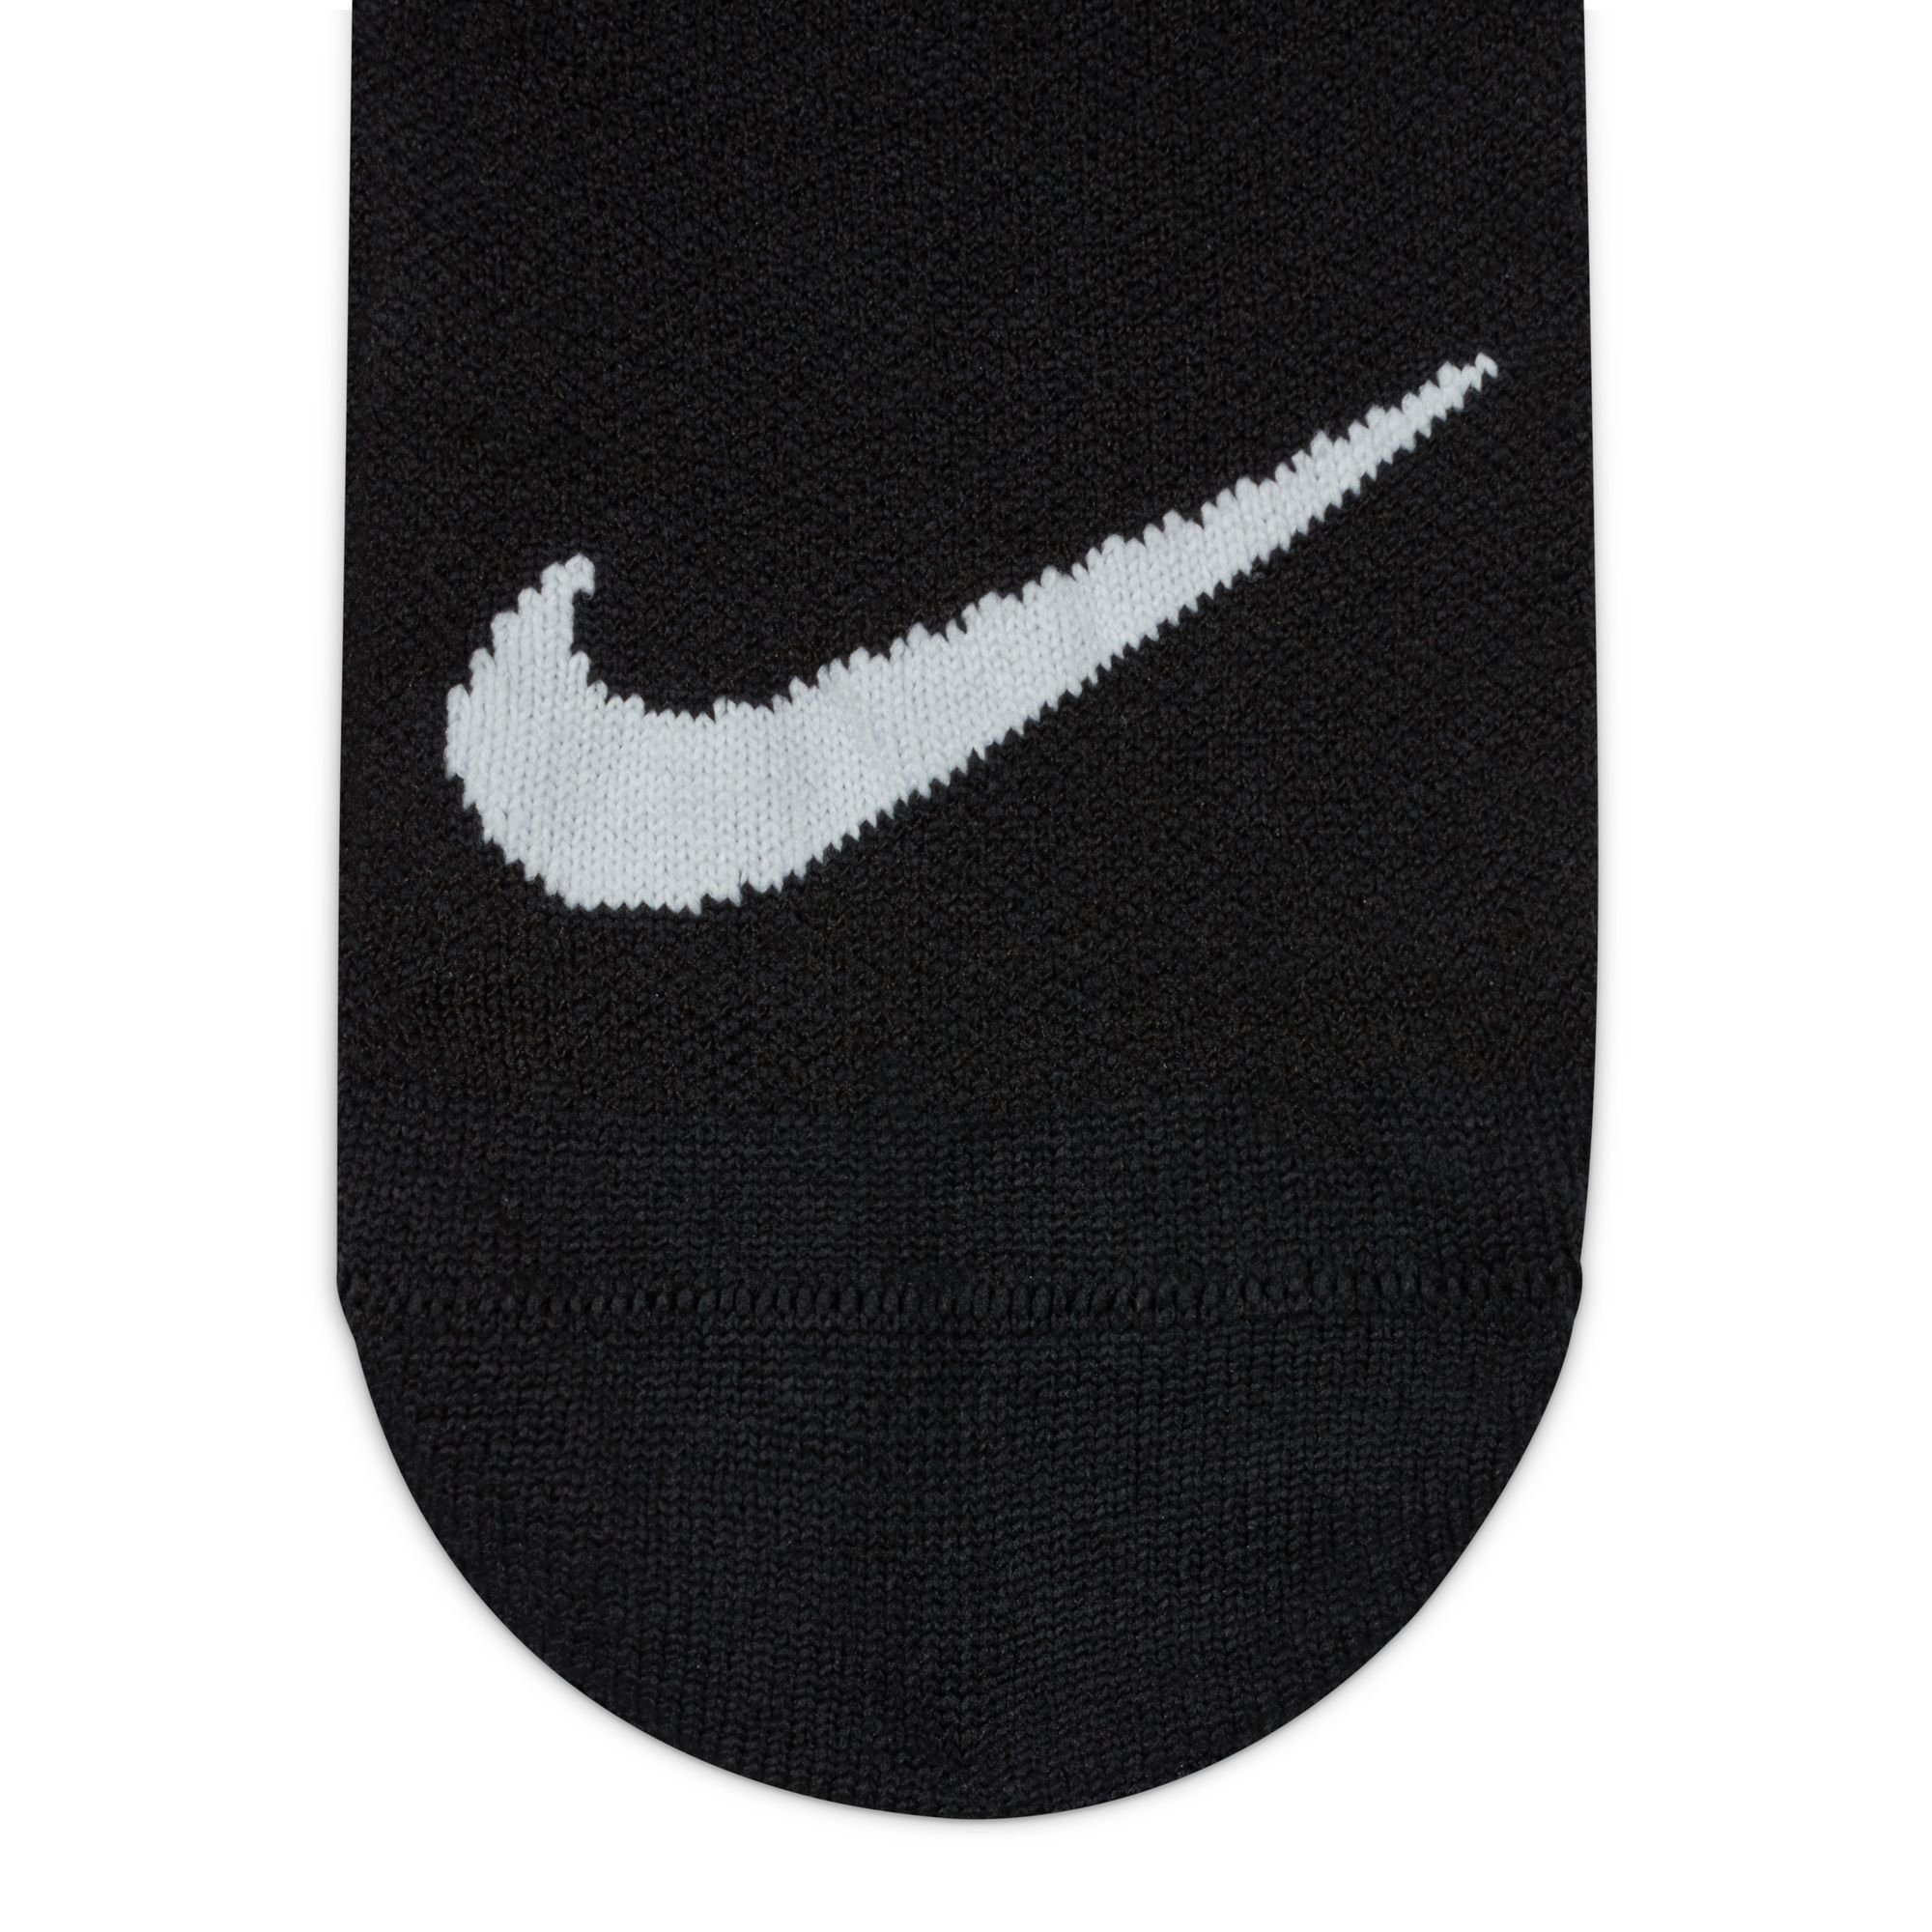 Nike Füßlinge (3-Paar) mit atmungsaktivem 1x 1x 1x weiß Mesh schwarz, grau